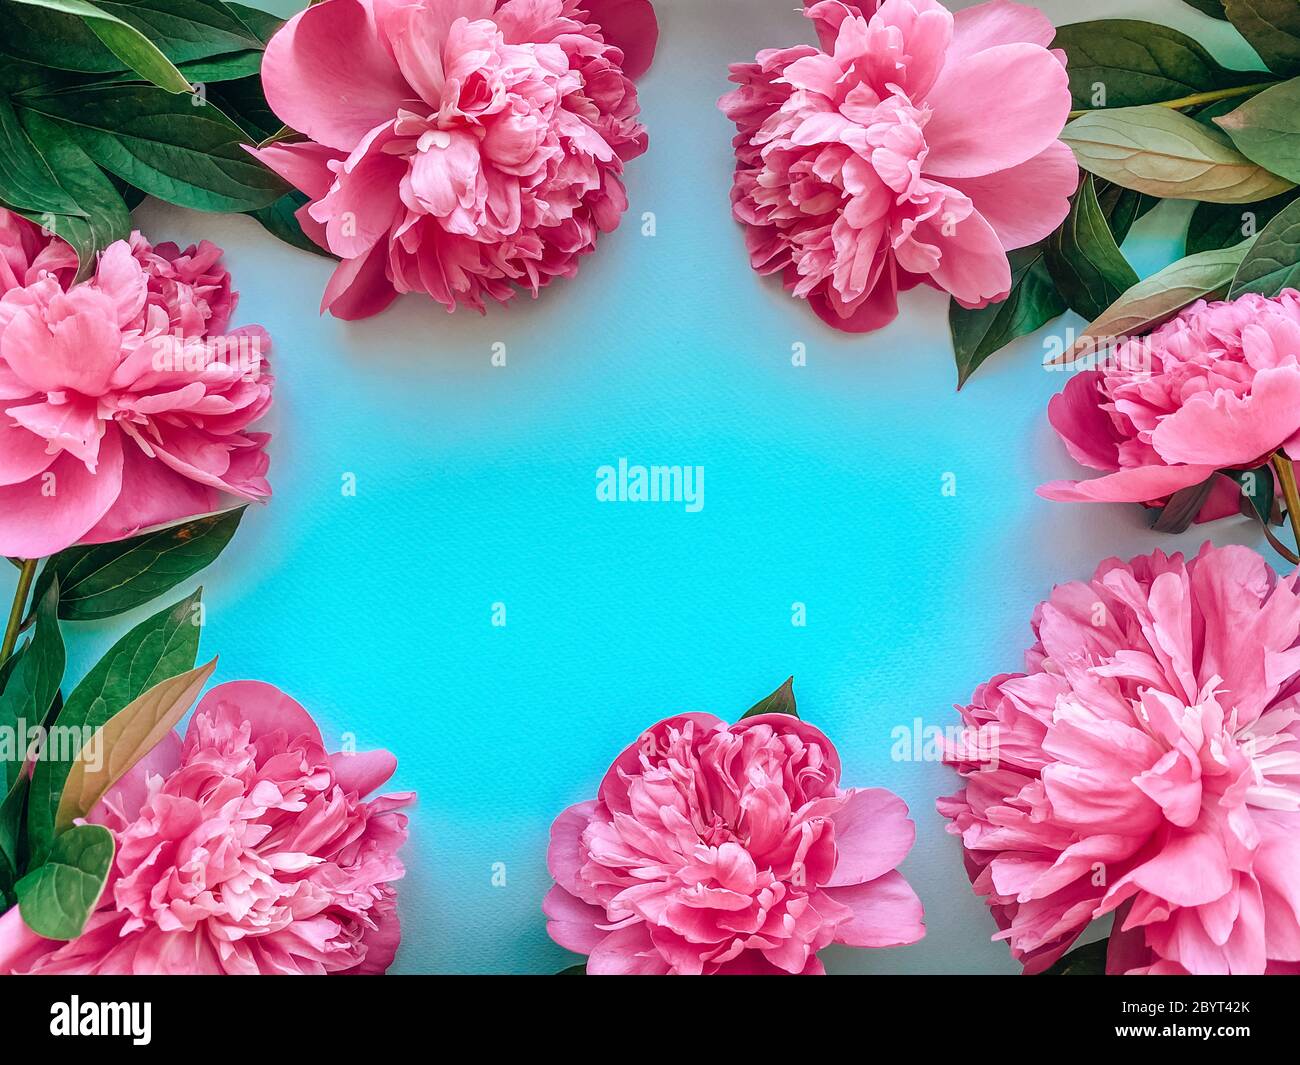 Plantilla de flores de peonías frescas rosadas sobre fondo azul. Fondo  floral natural para tus proyectos Fotografía de stock - Alamy